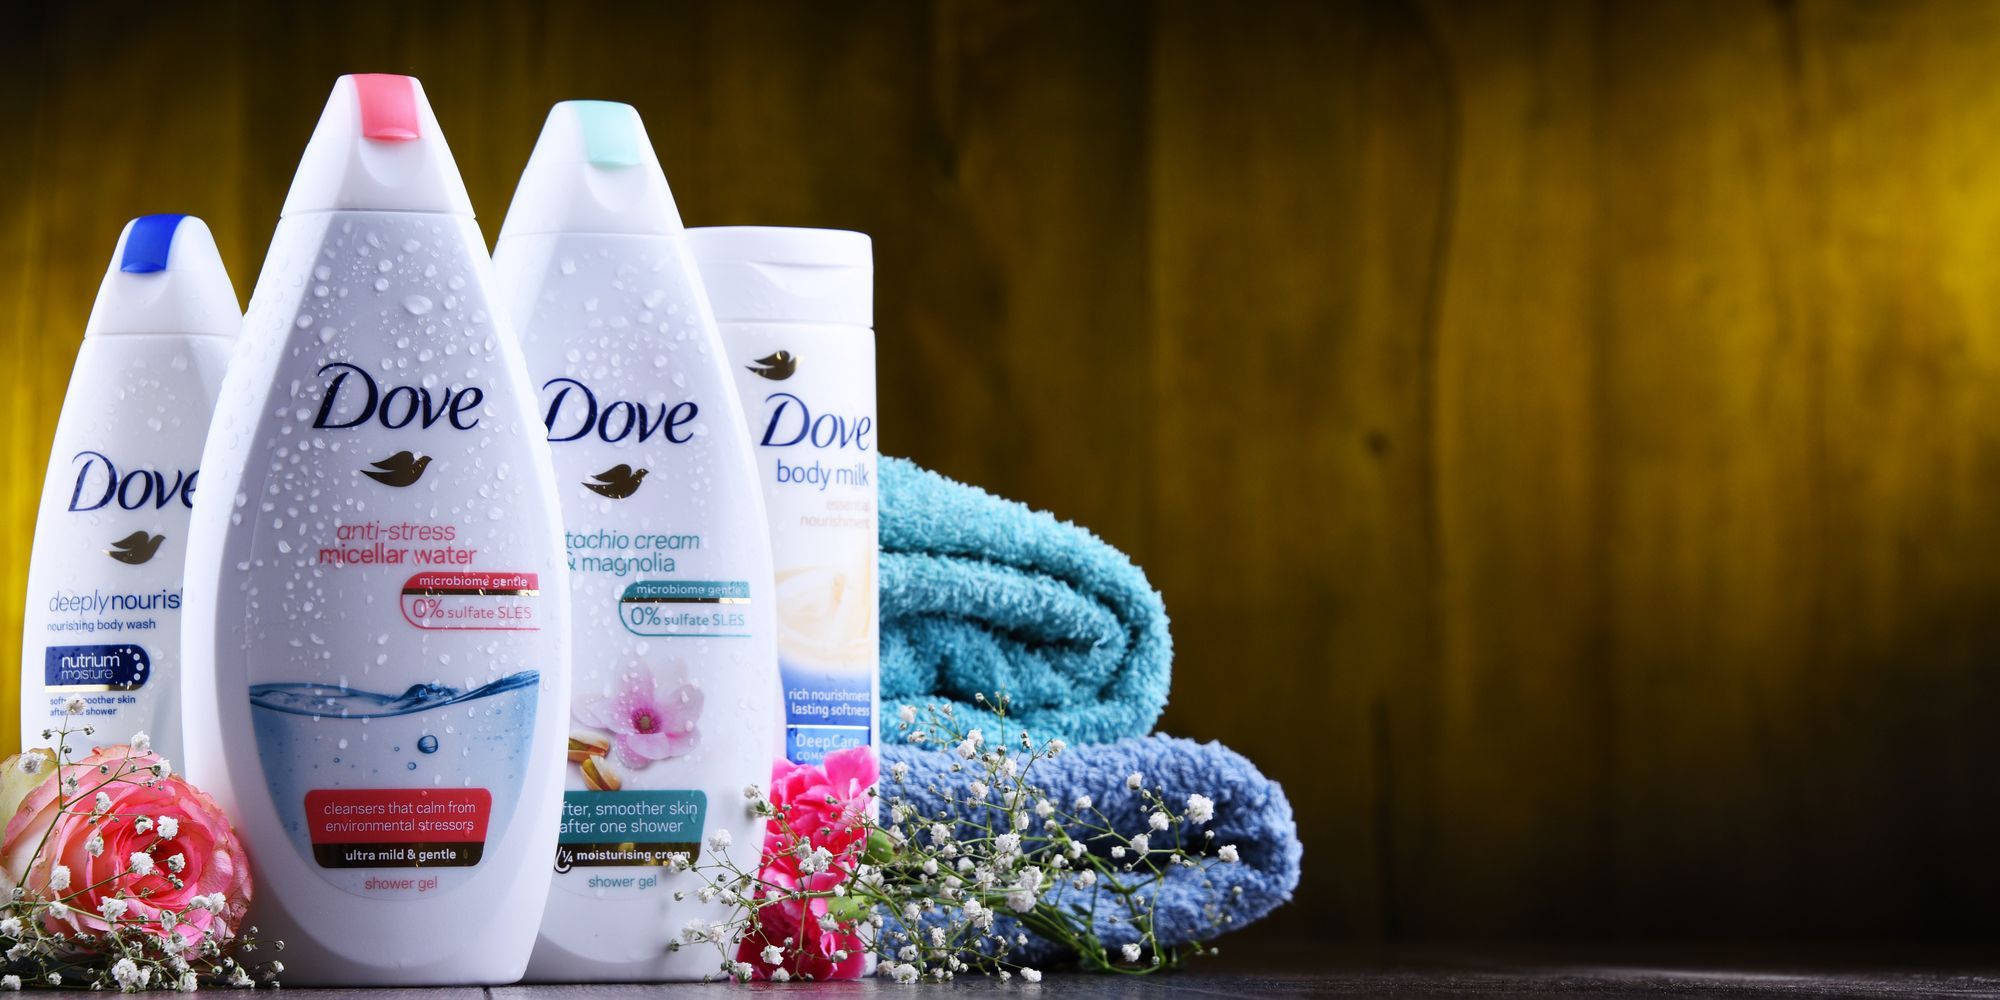 Can I use Dove body wash as shampoo?